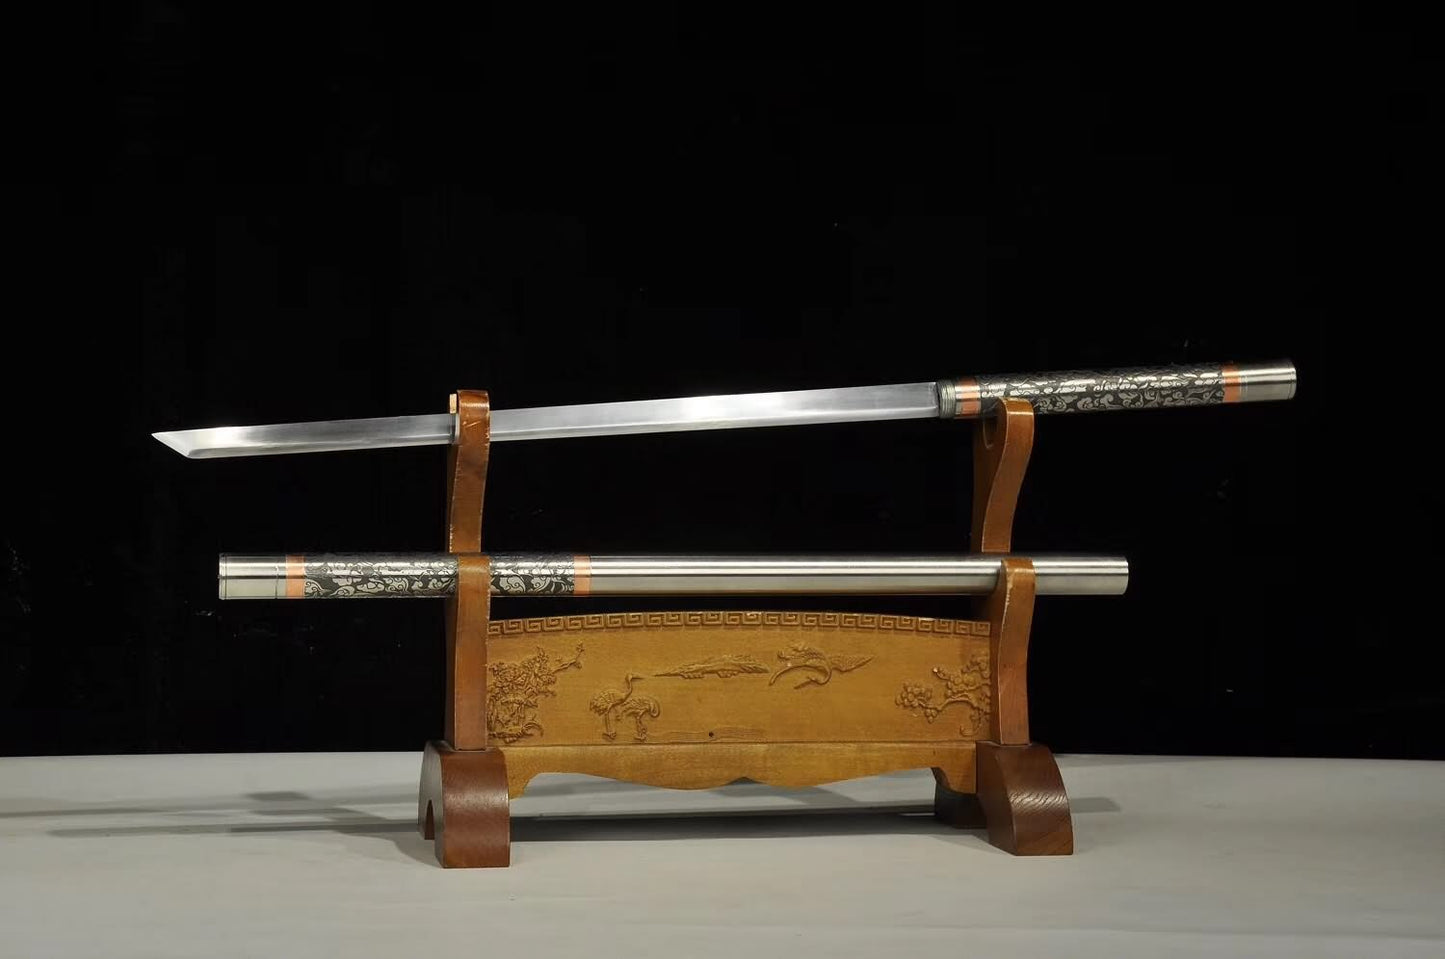 Golden cudgel Kinfe,High carbon steel blade - Chinese sword shop